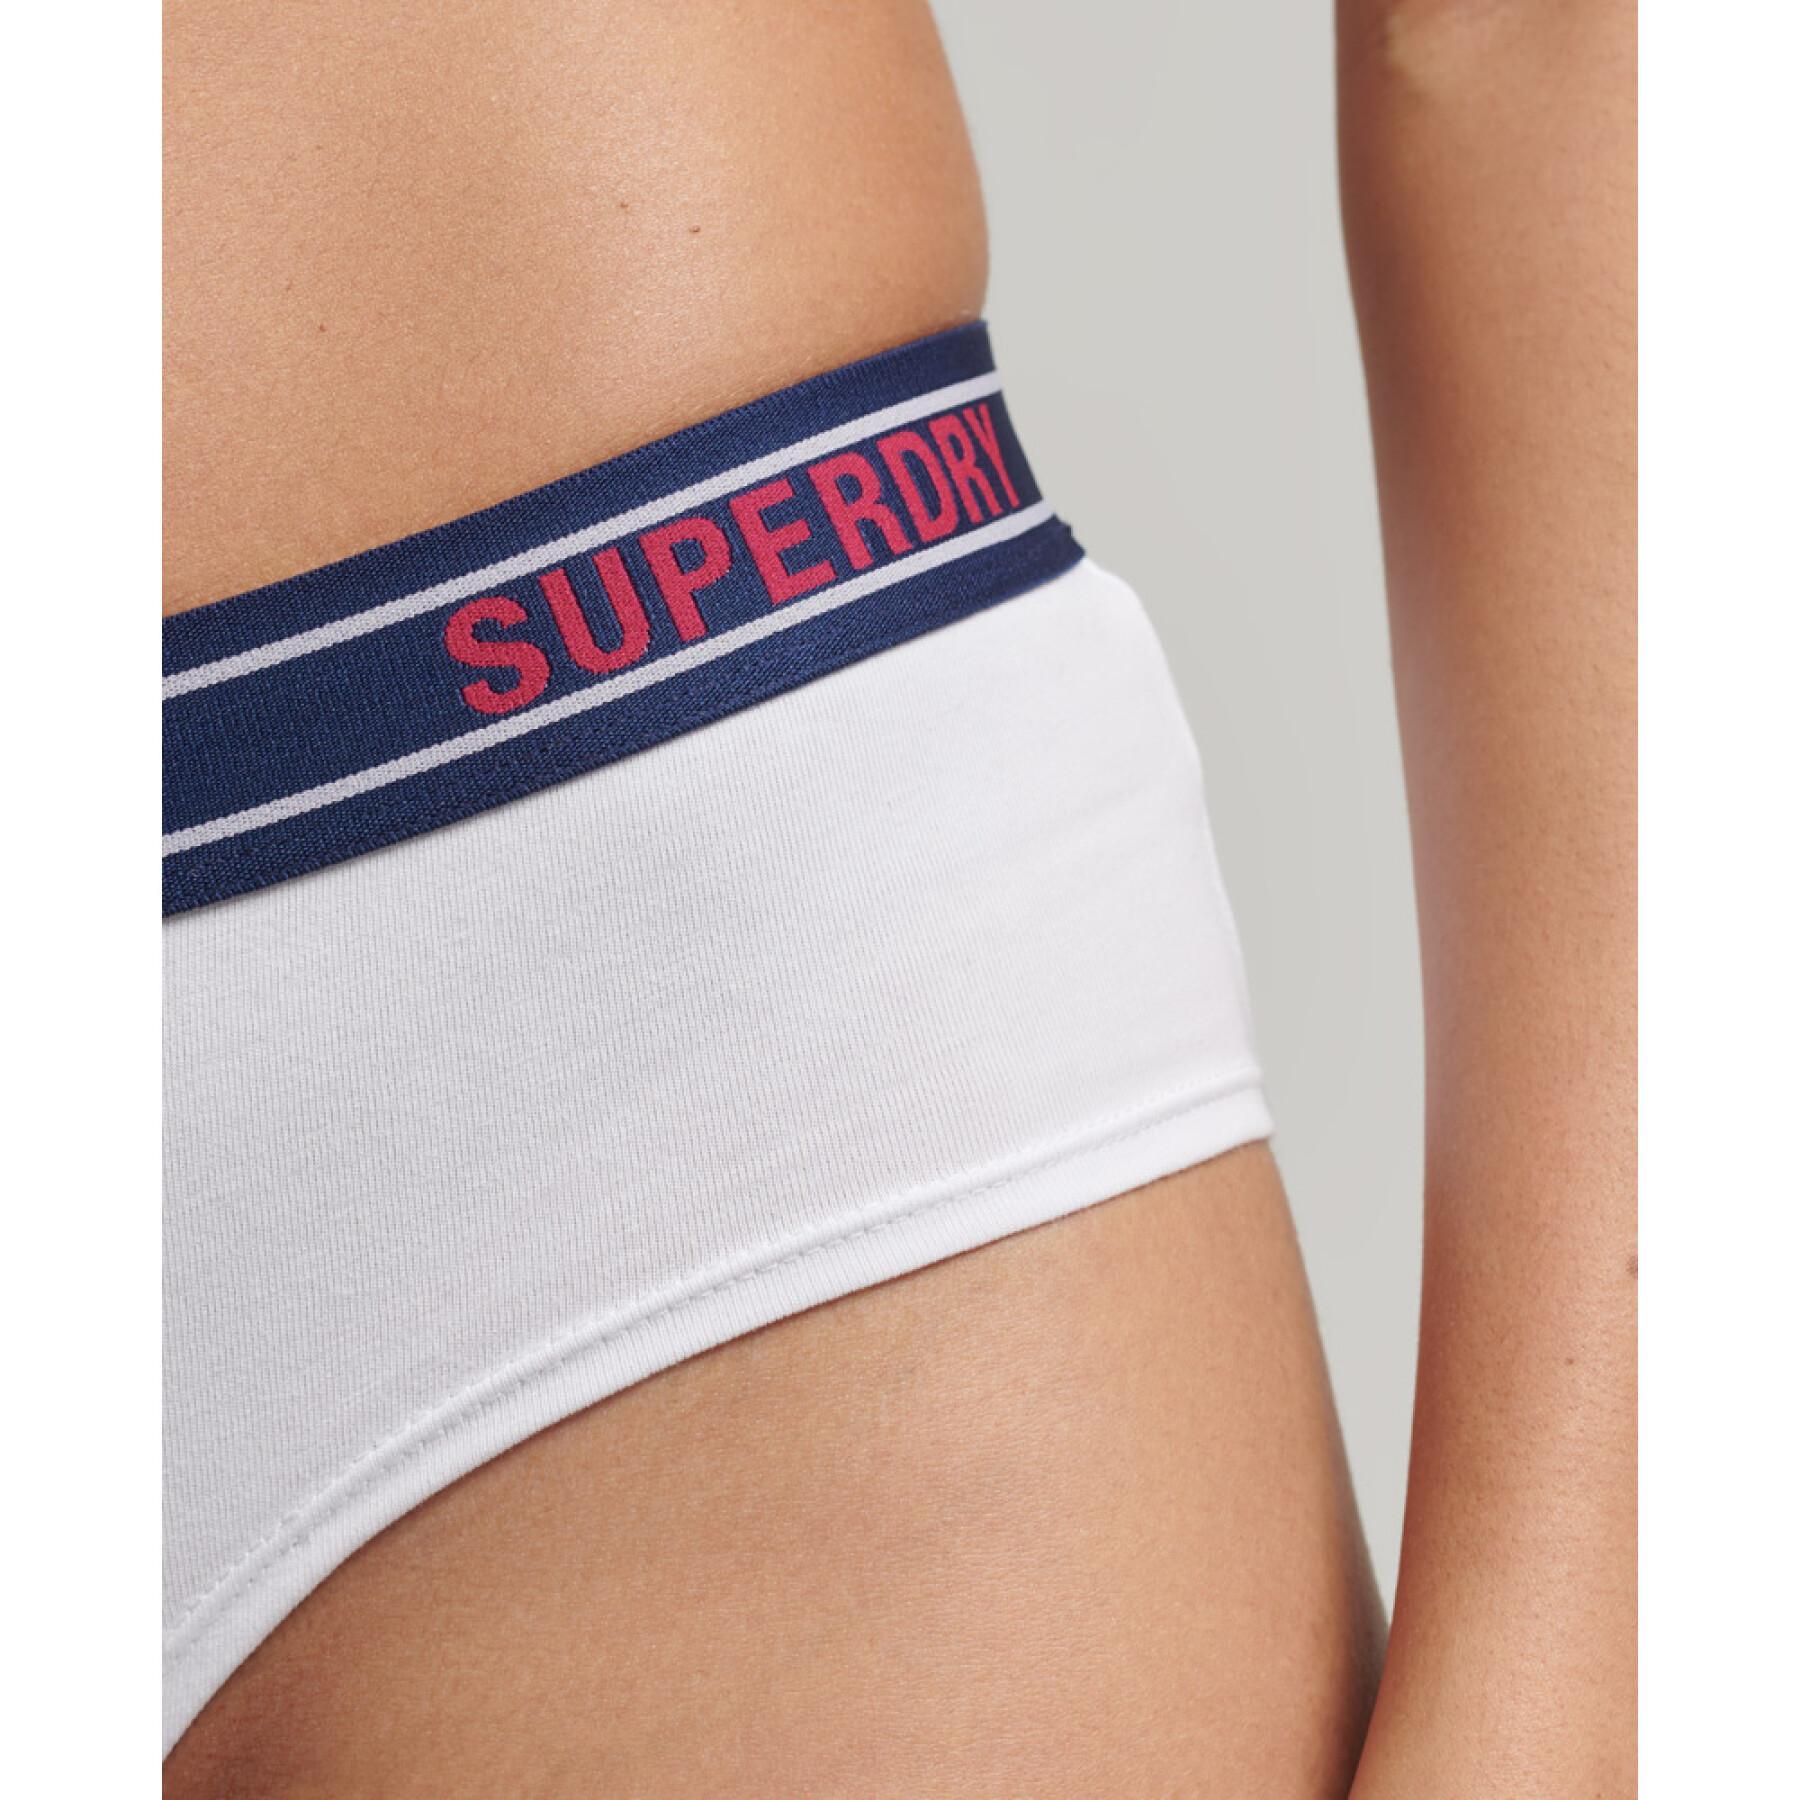 Women's panties Superdry